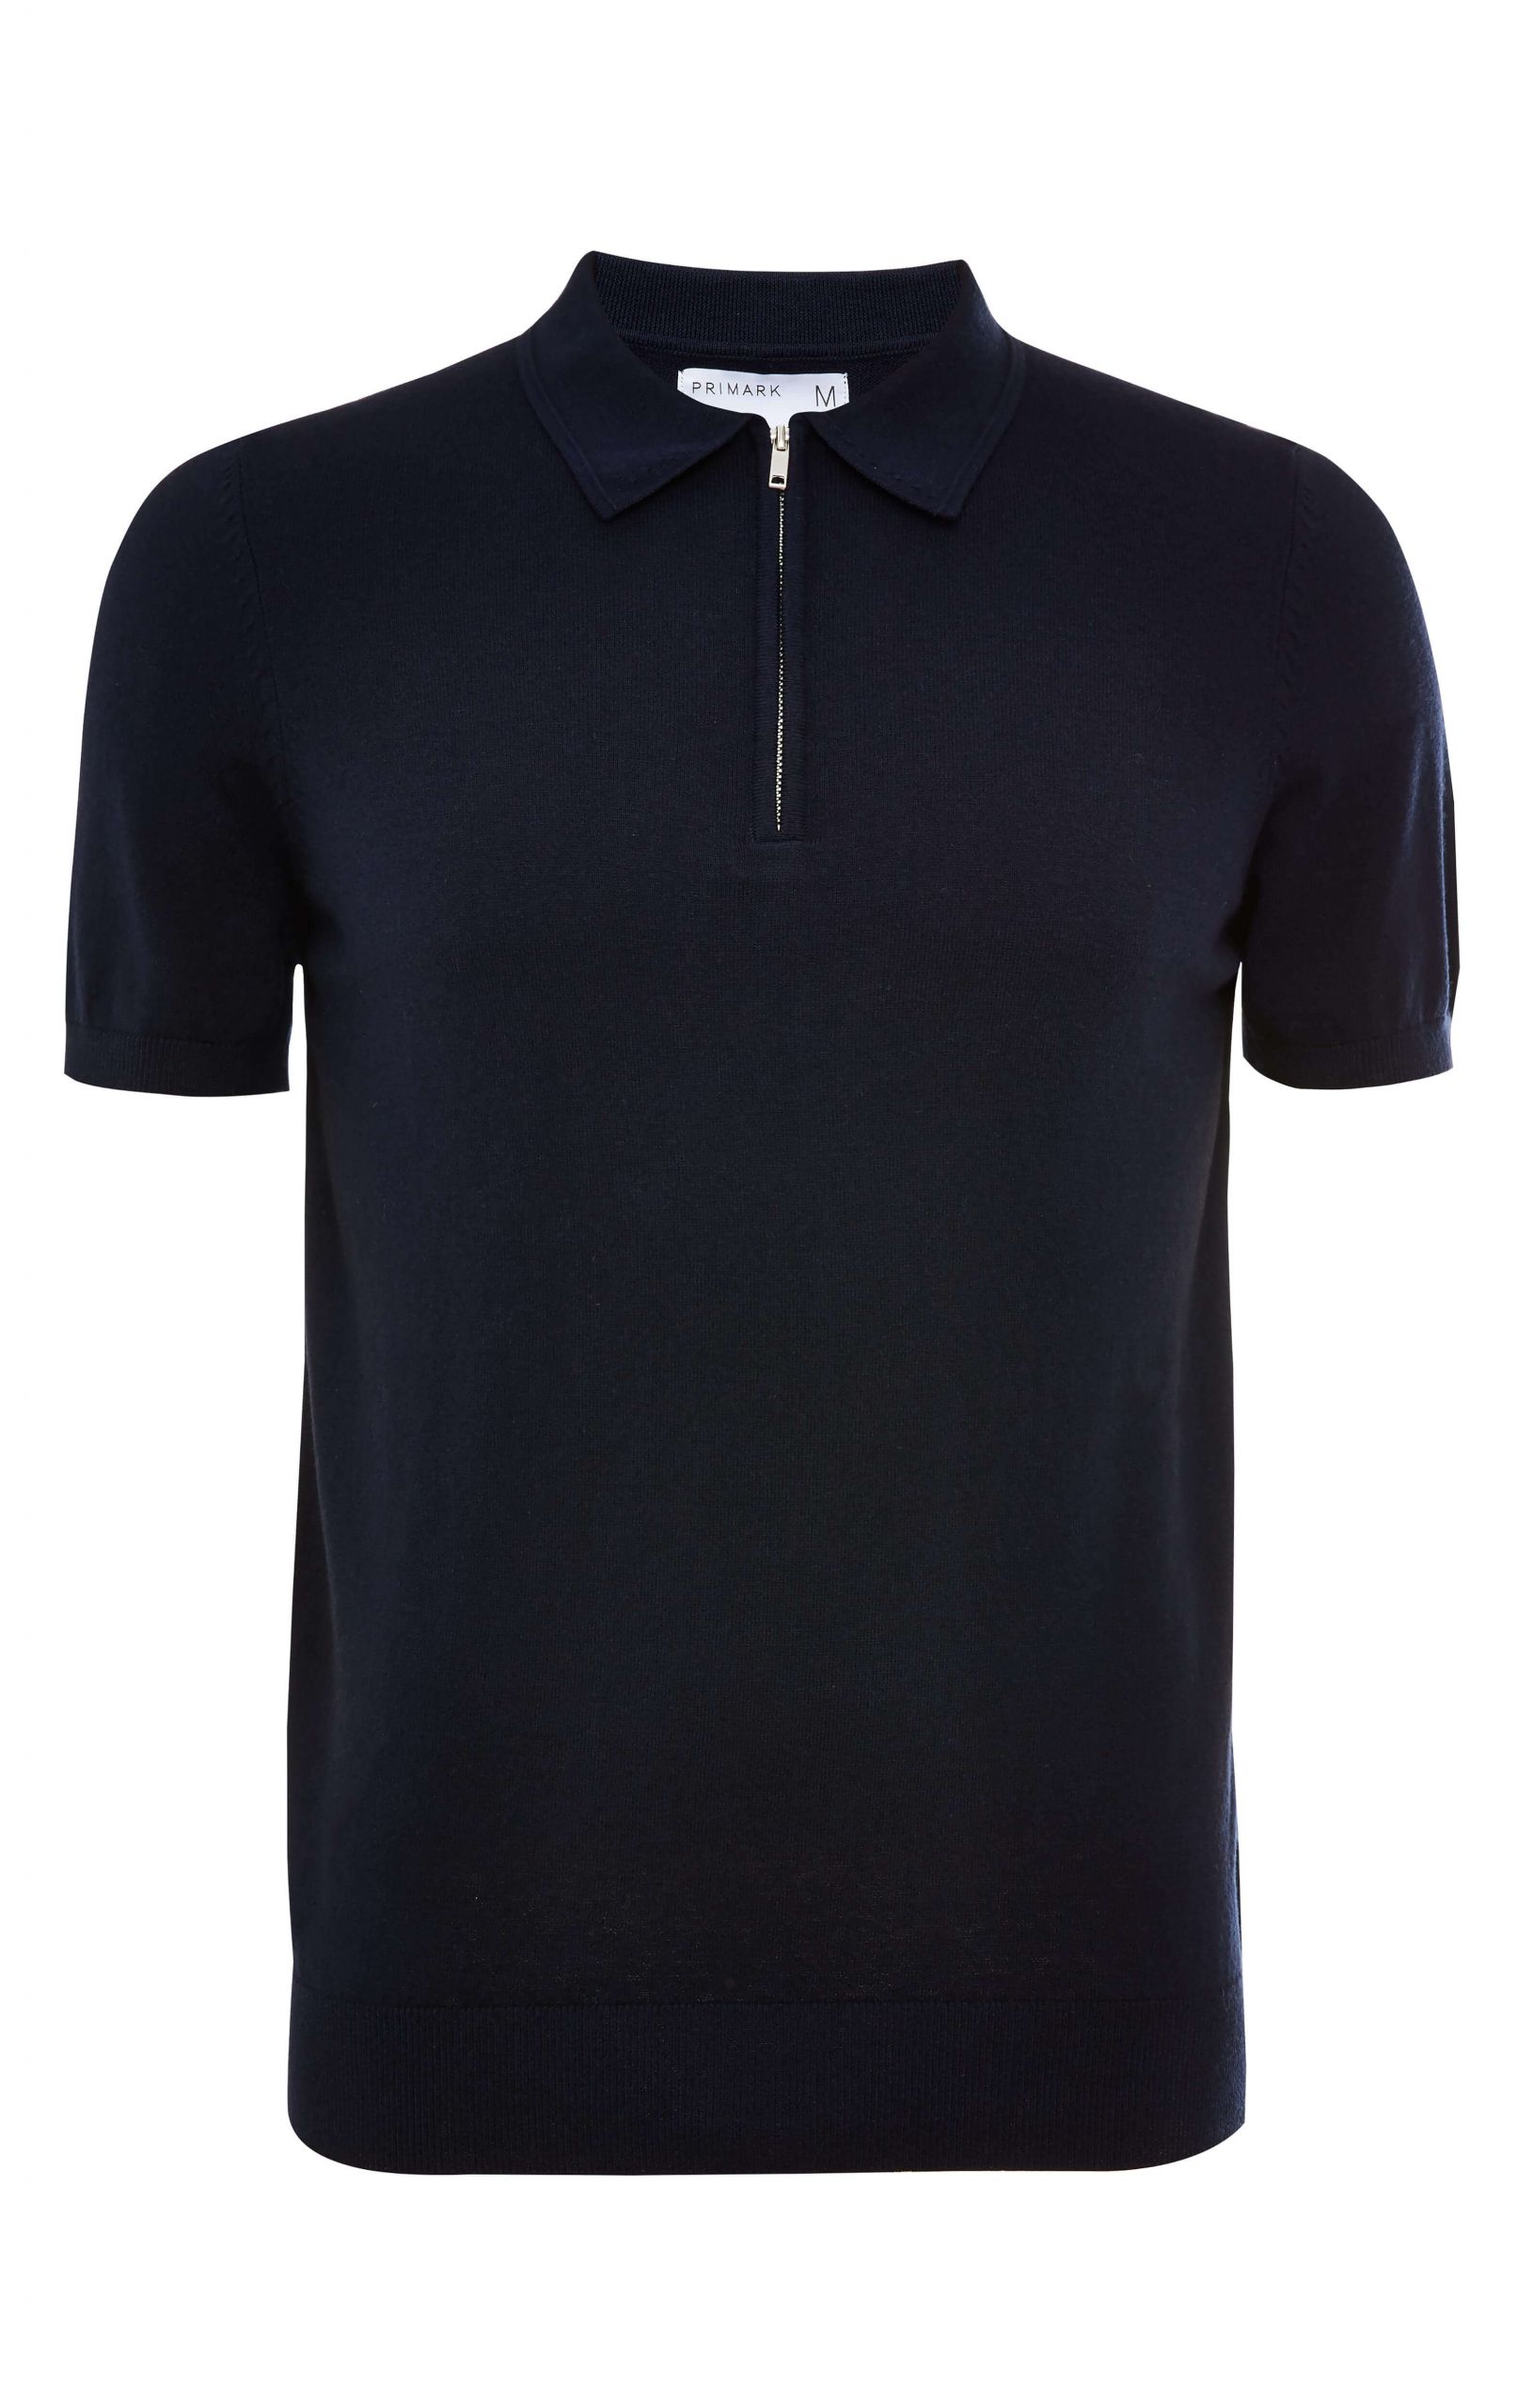 Camisetas y polos para hombre 2021 de Primark que te van a encantar - Navy polo con cuello de cremallera 16E scaled